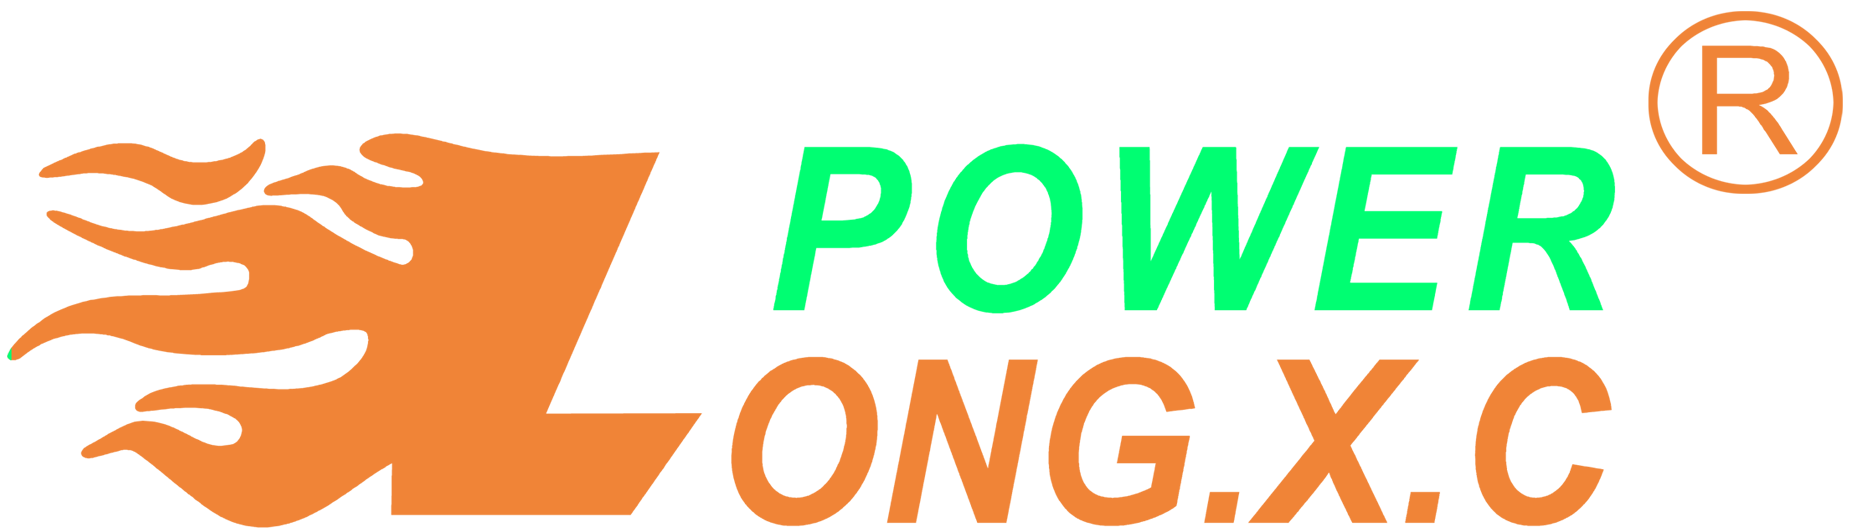 Longxingchen Power